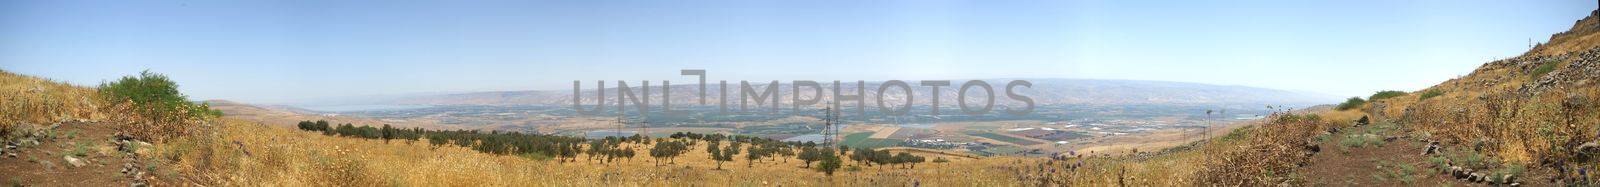 Galilee landscape panorama by javax